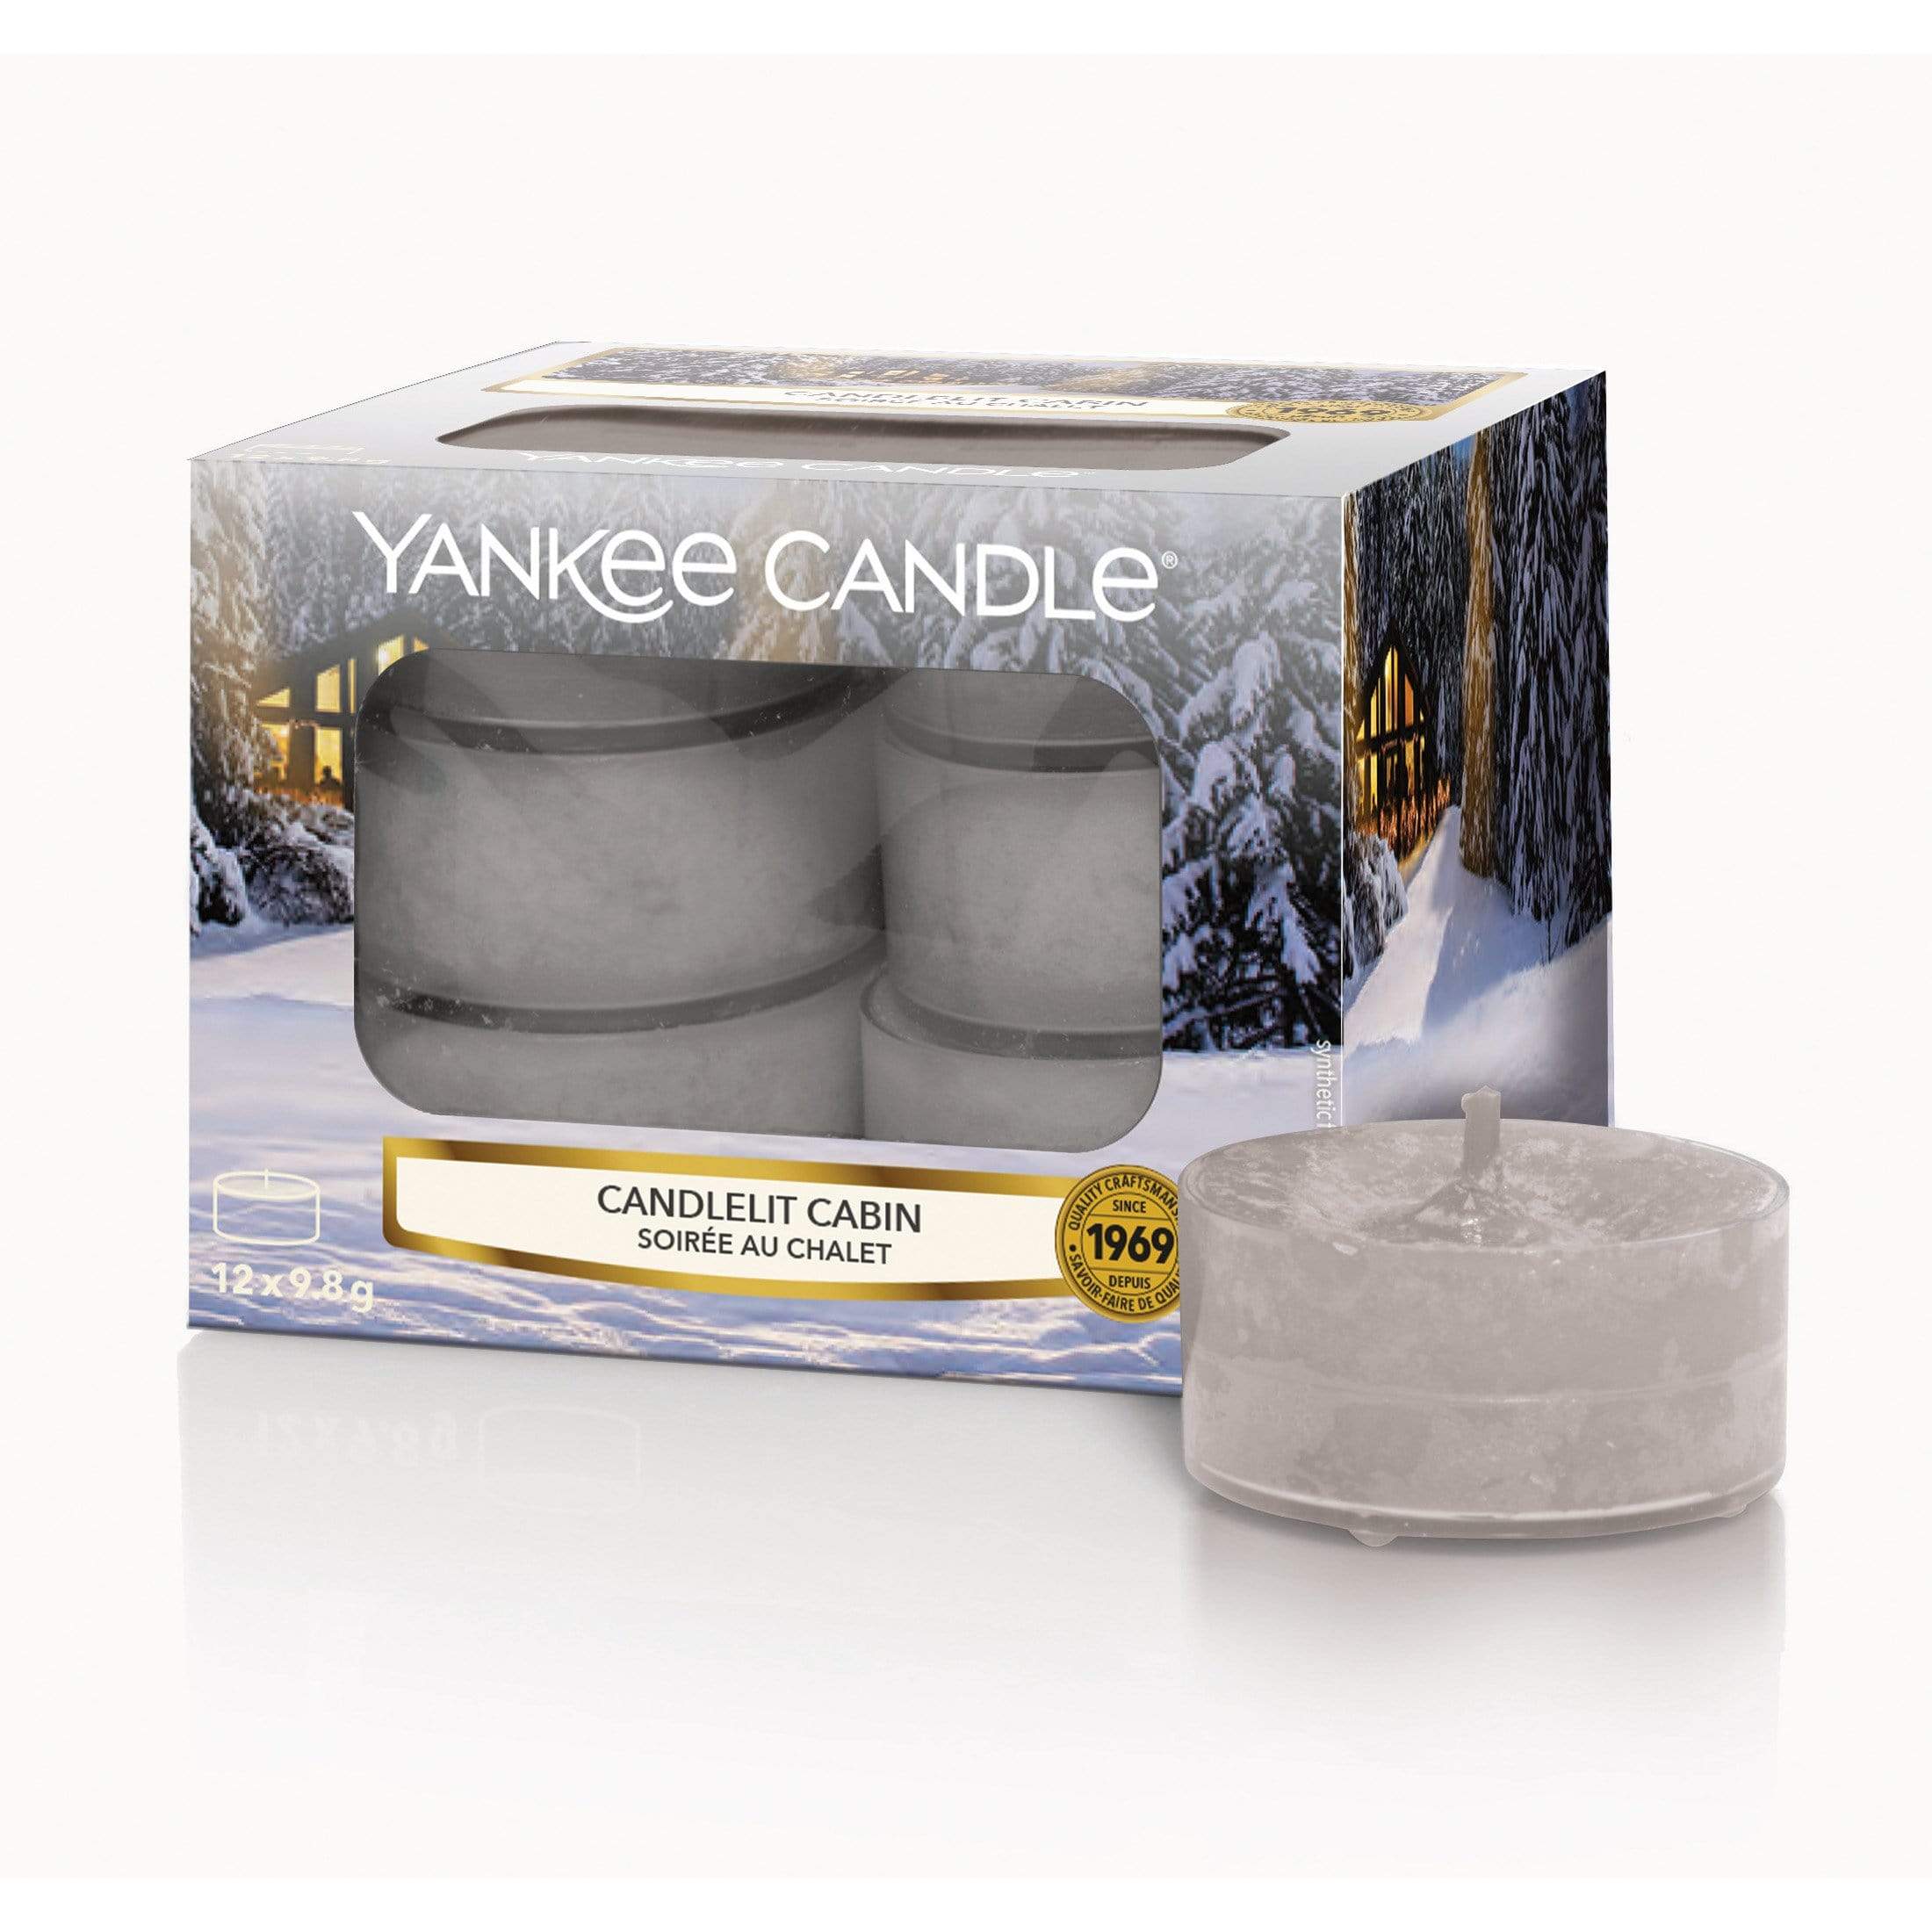 Yankee Candle Yankee Candle Yankee Candle Pack of 12 Tea Light Candles - Candlelit Cabin